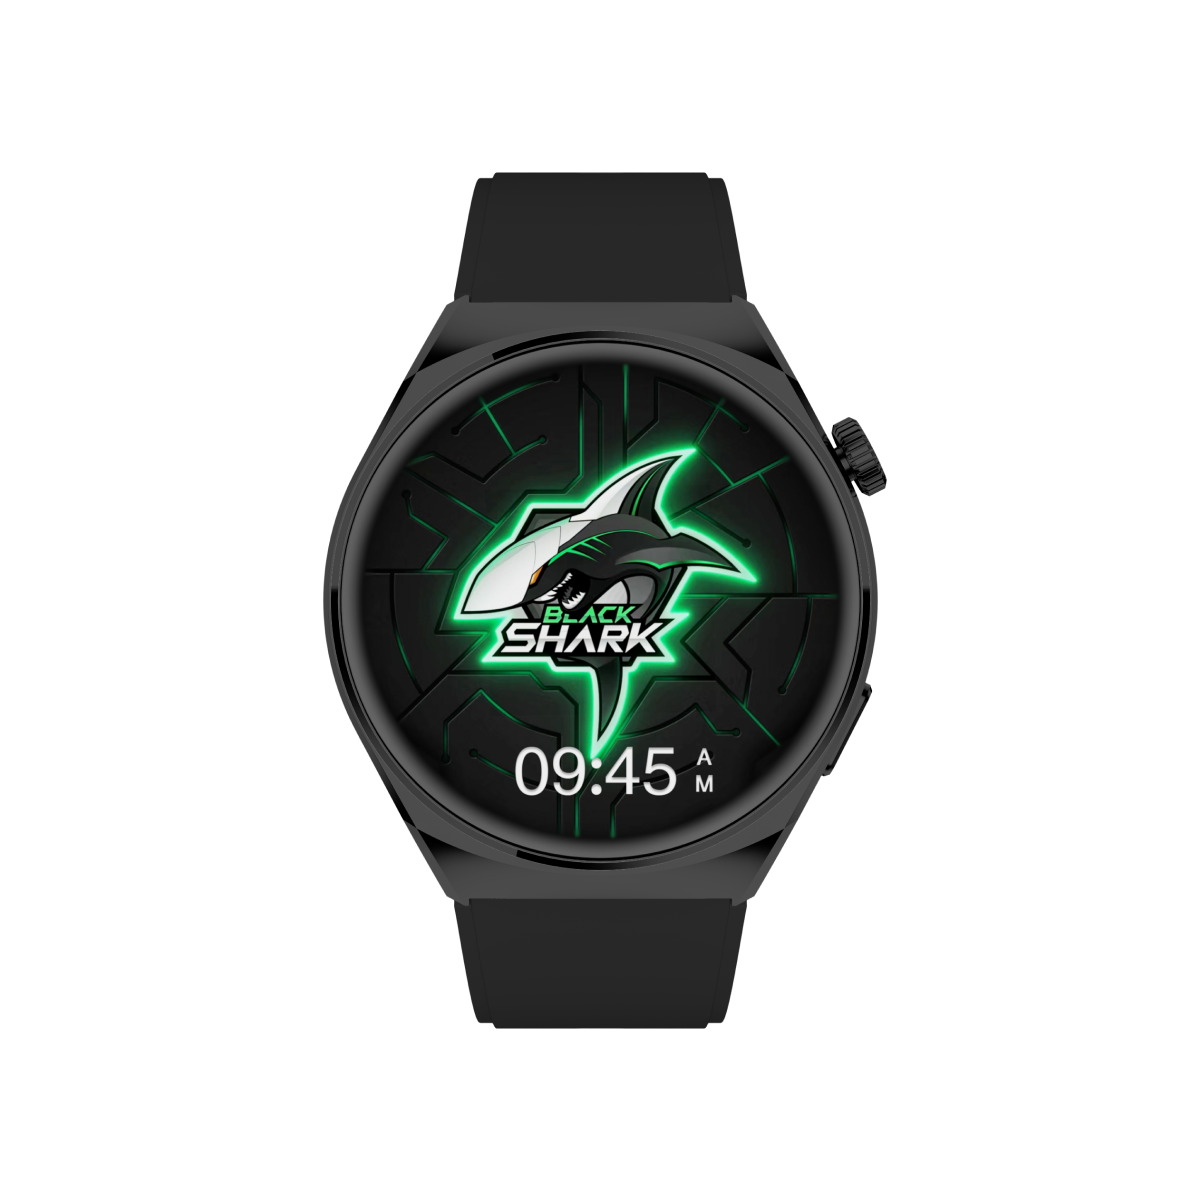 Black Shark S1 Smart Watch